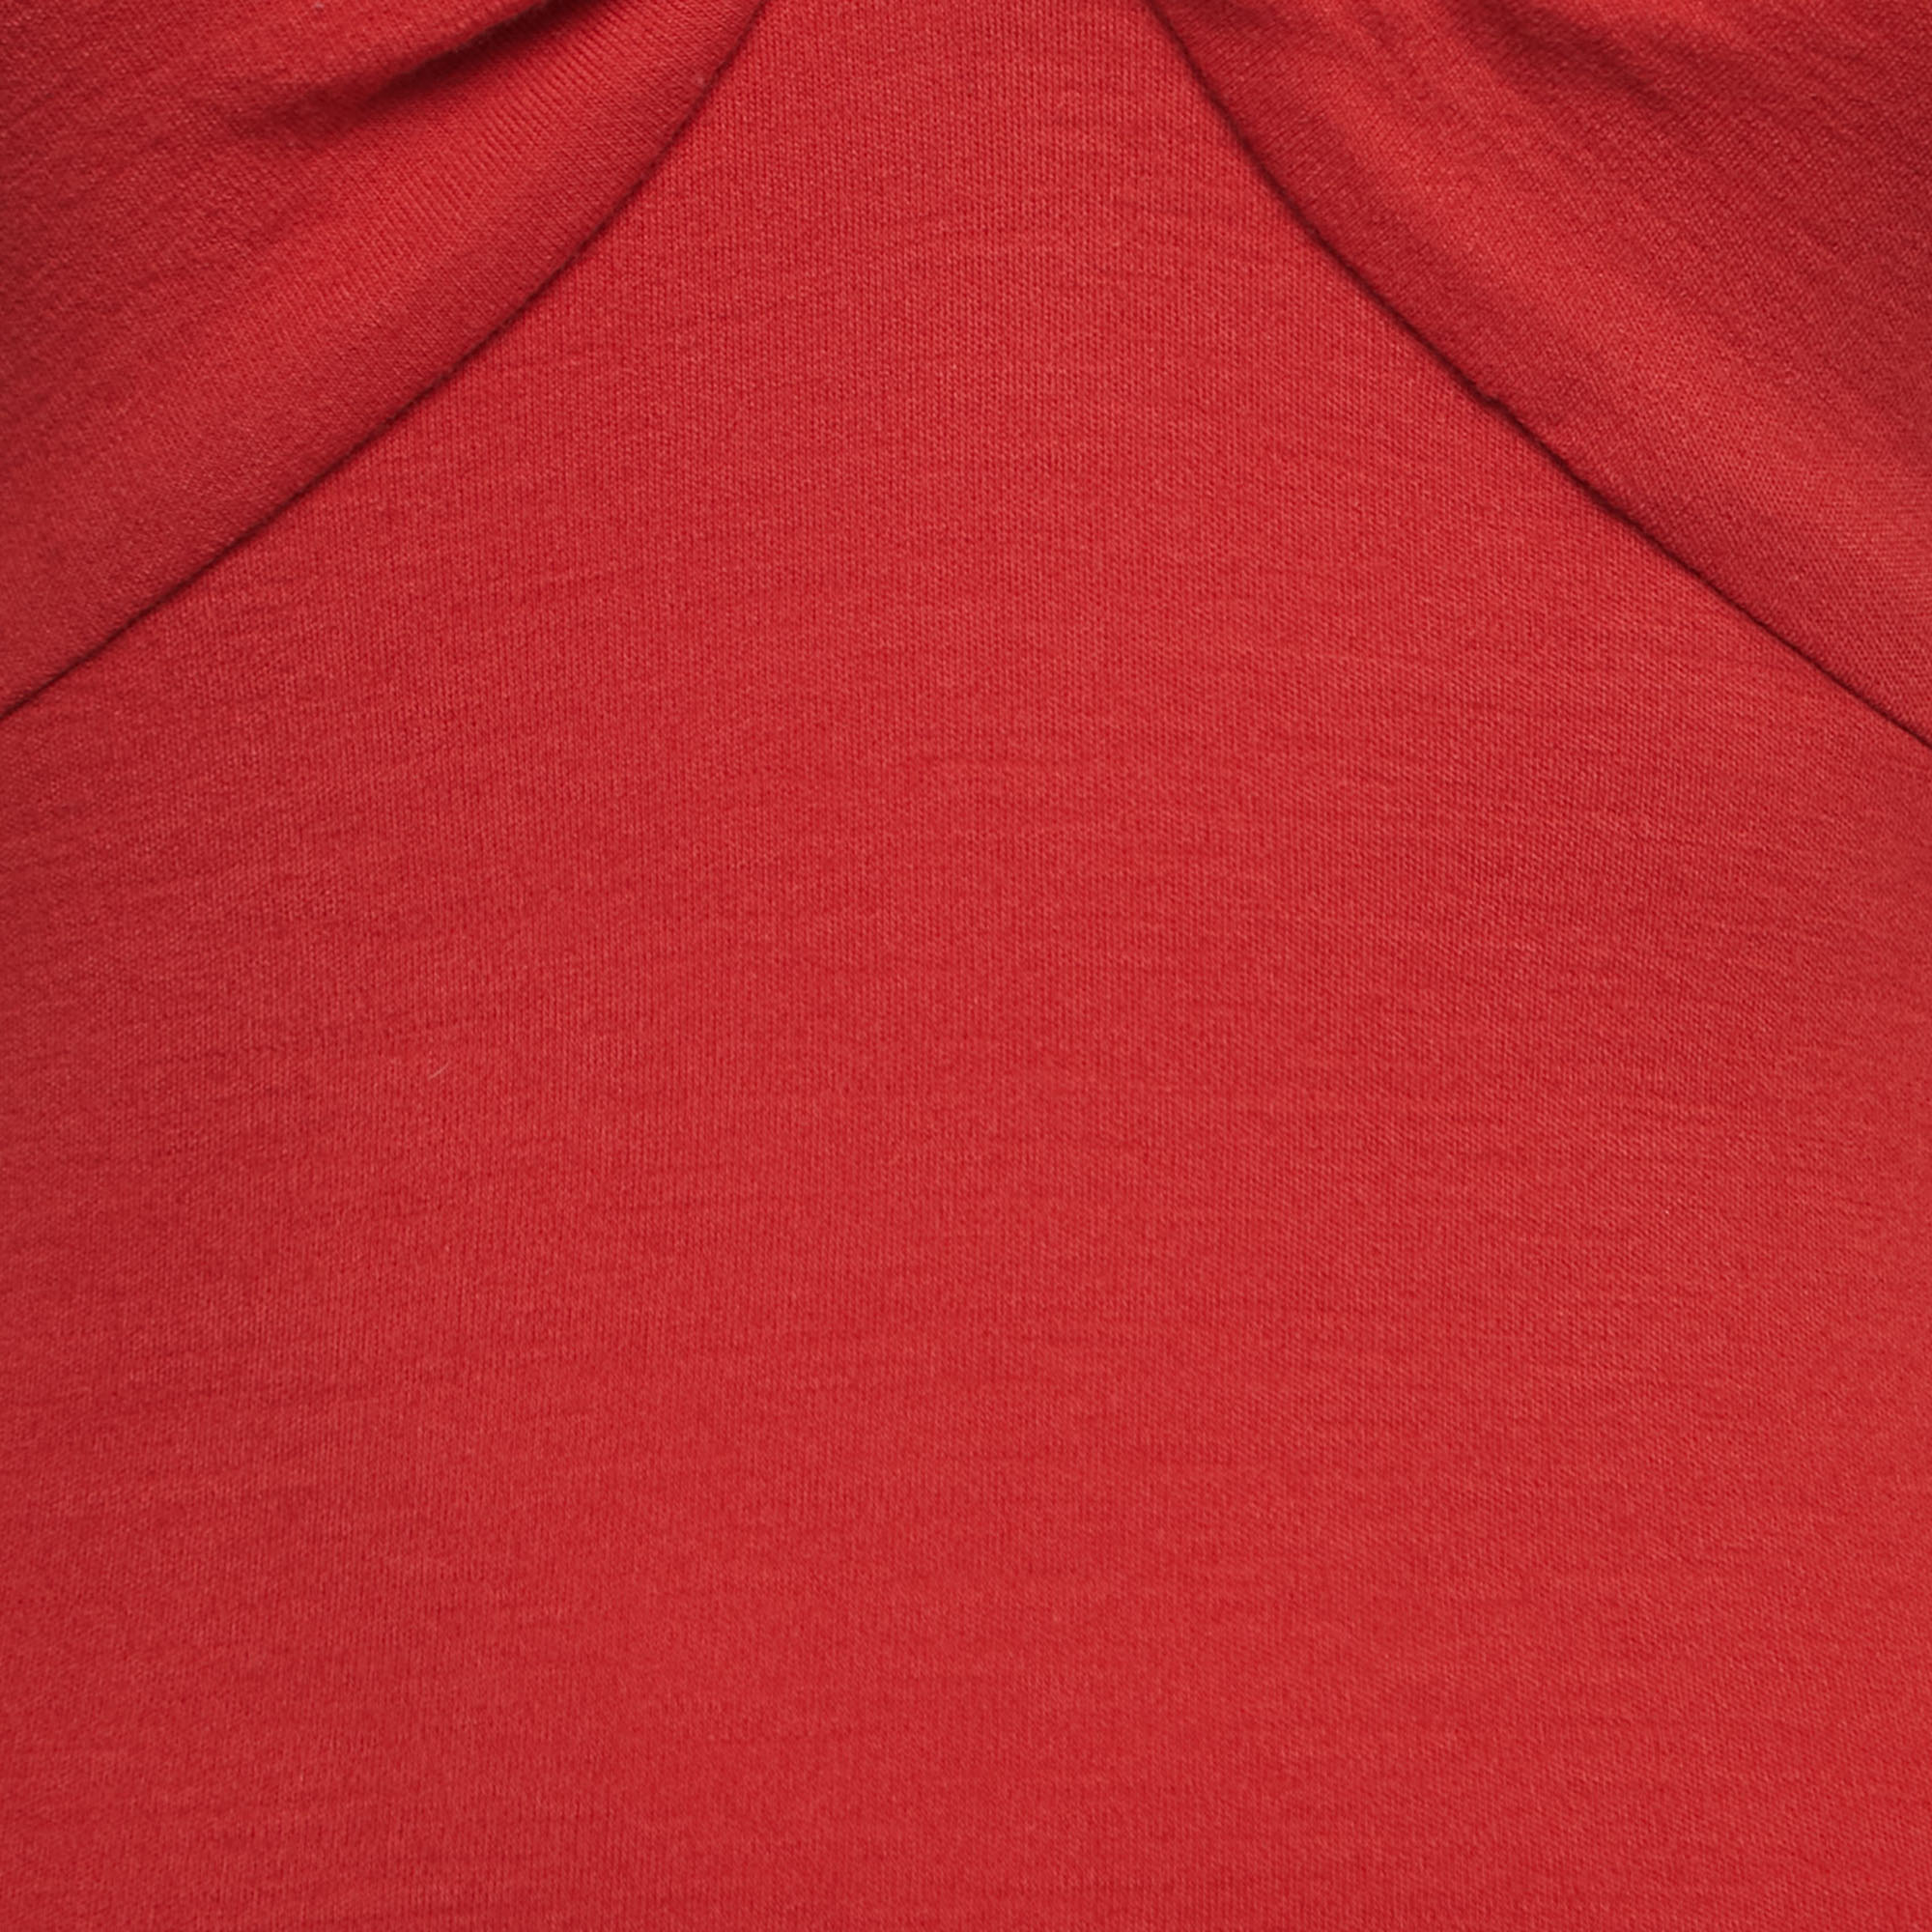 Diane Von Furstenberg Red Wool Knot Detail Mini Dress XS